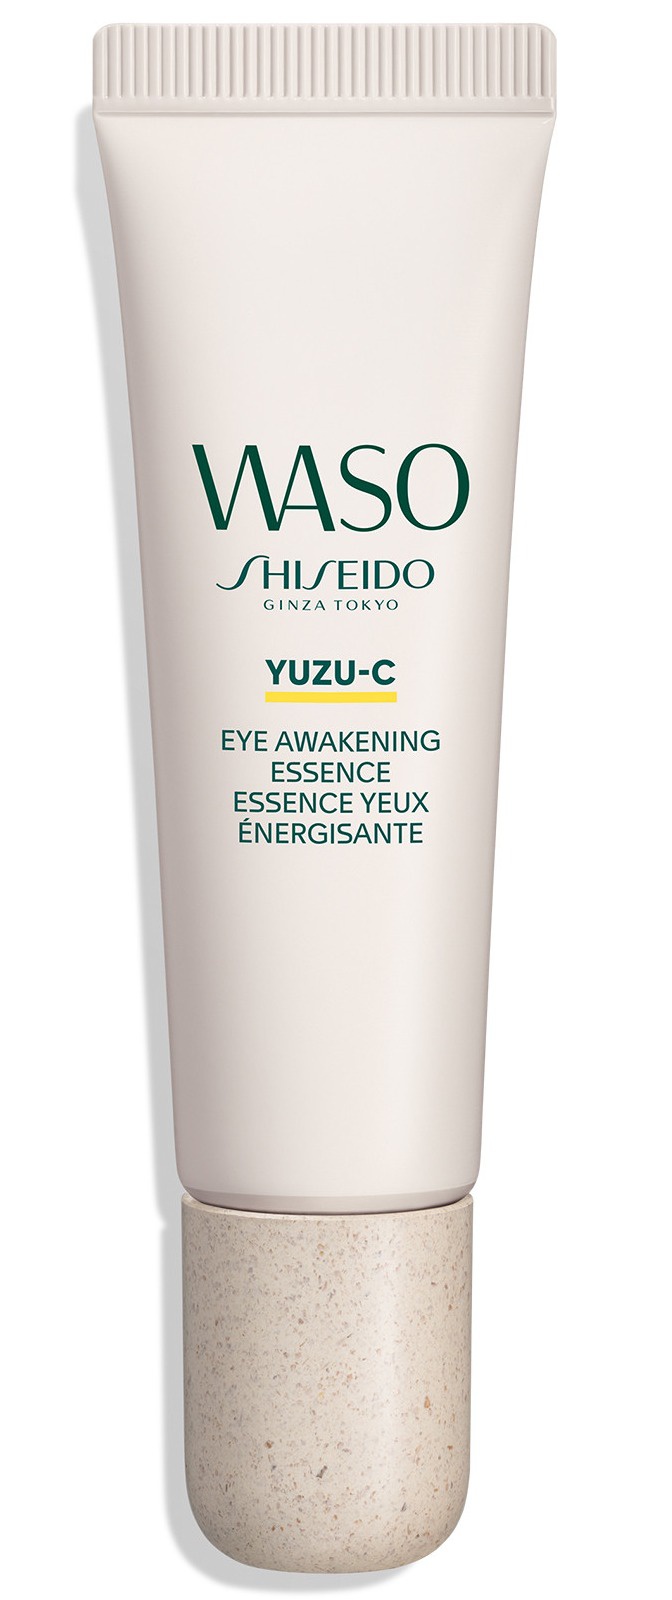 Shiseido Waso Yuzu-c Eye Awakening Essence